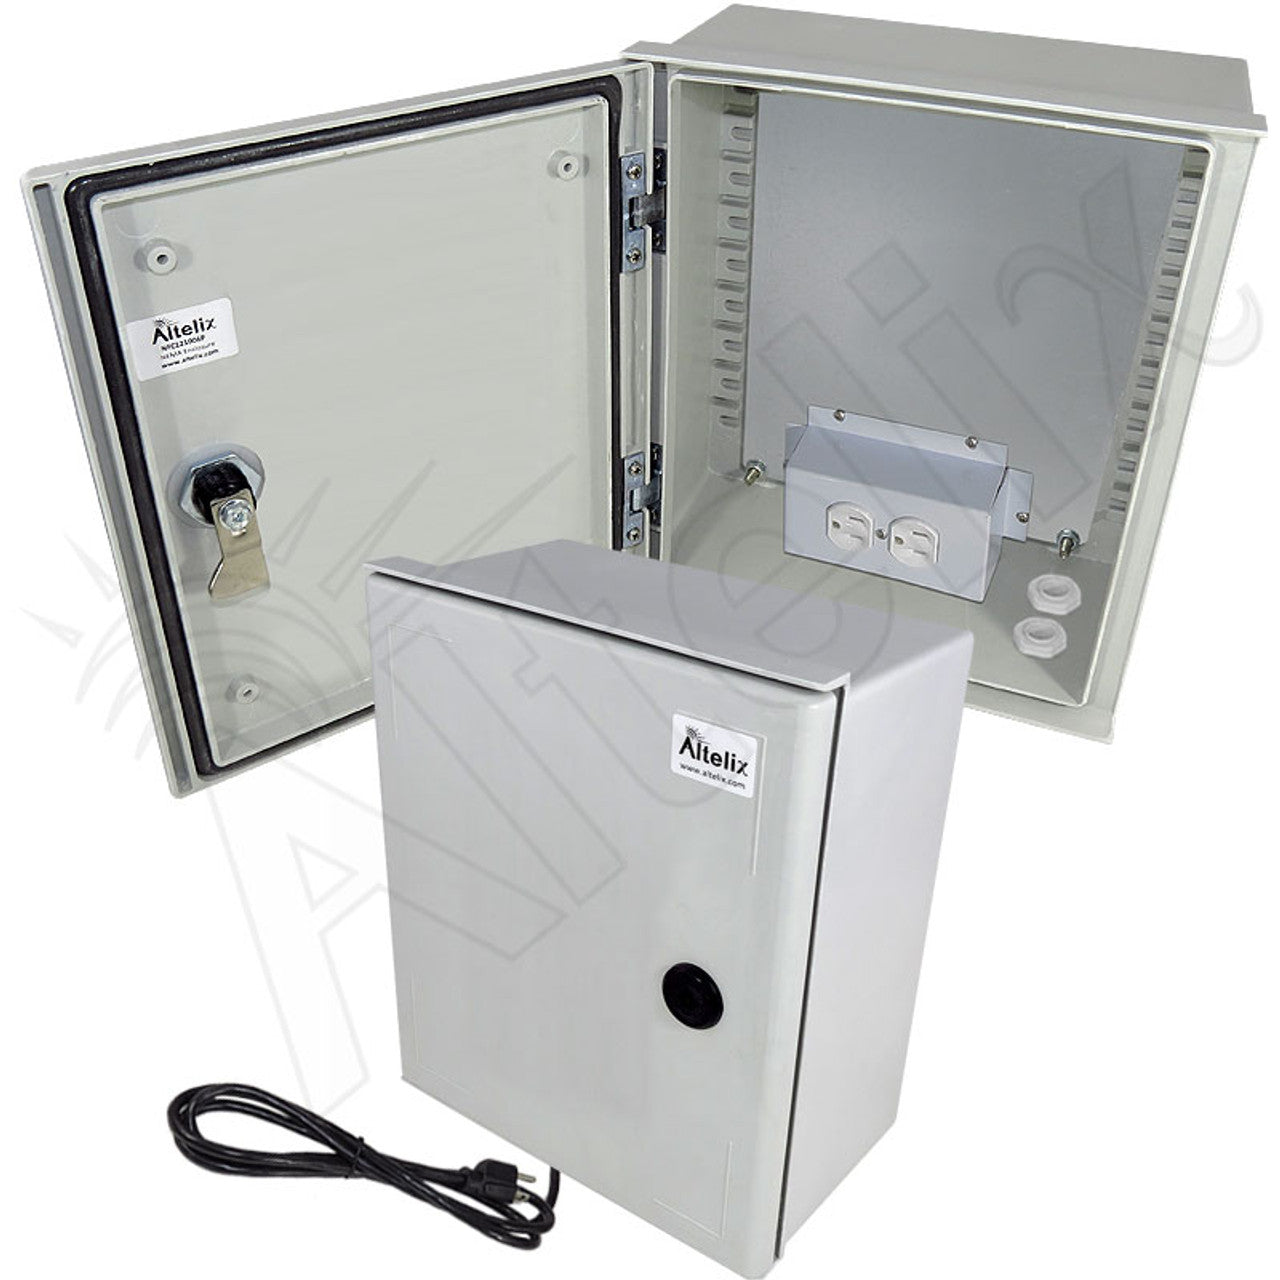 Altelix NEMA 3X Fiberglass Weatherproof Enclosure with Equipment Mounting Plate, 120 VAC Outlets & Power Cord-1